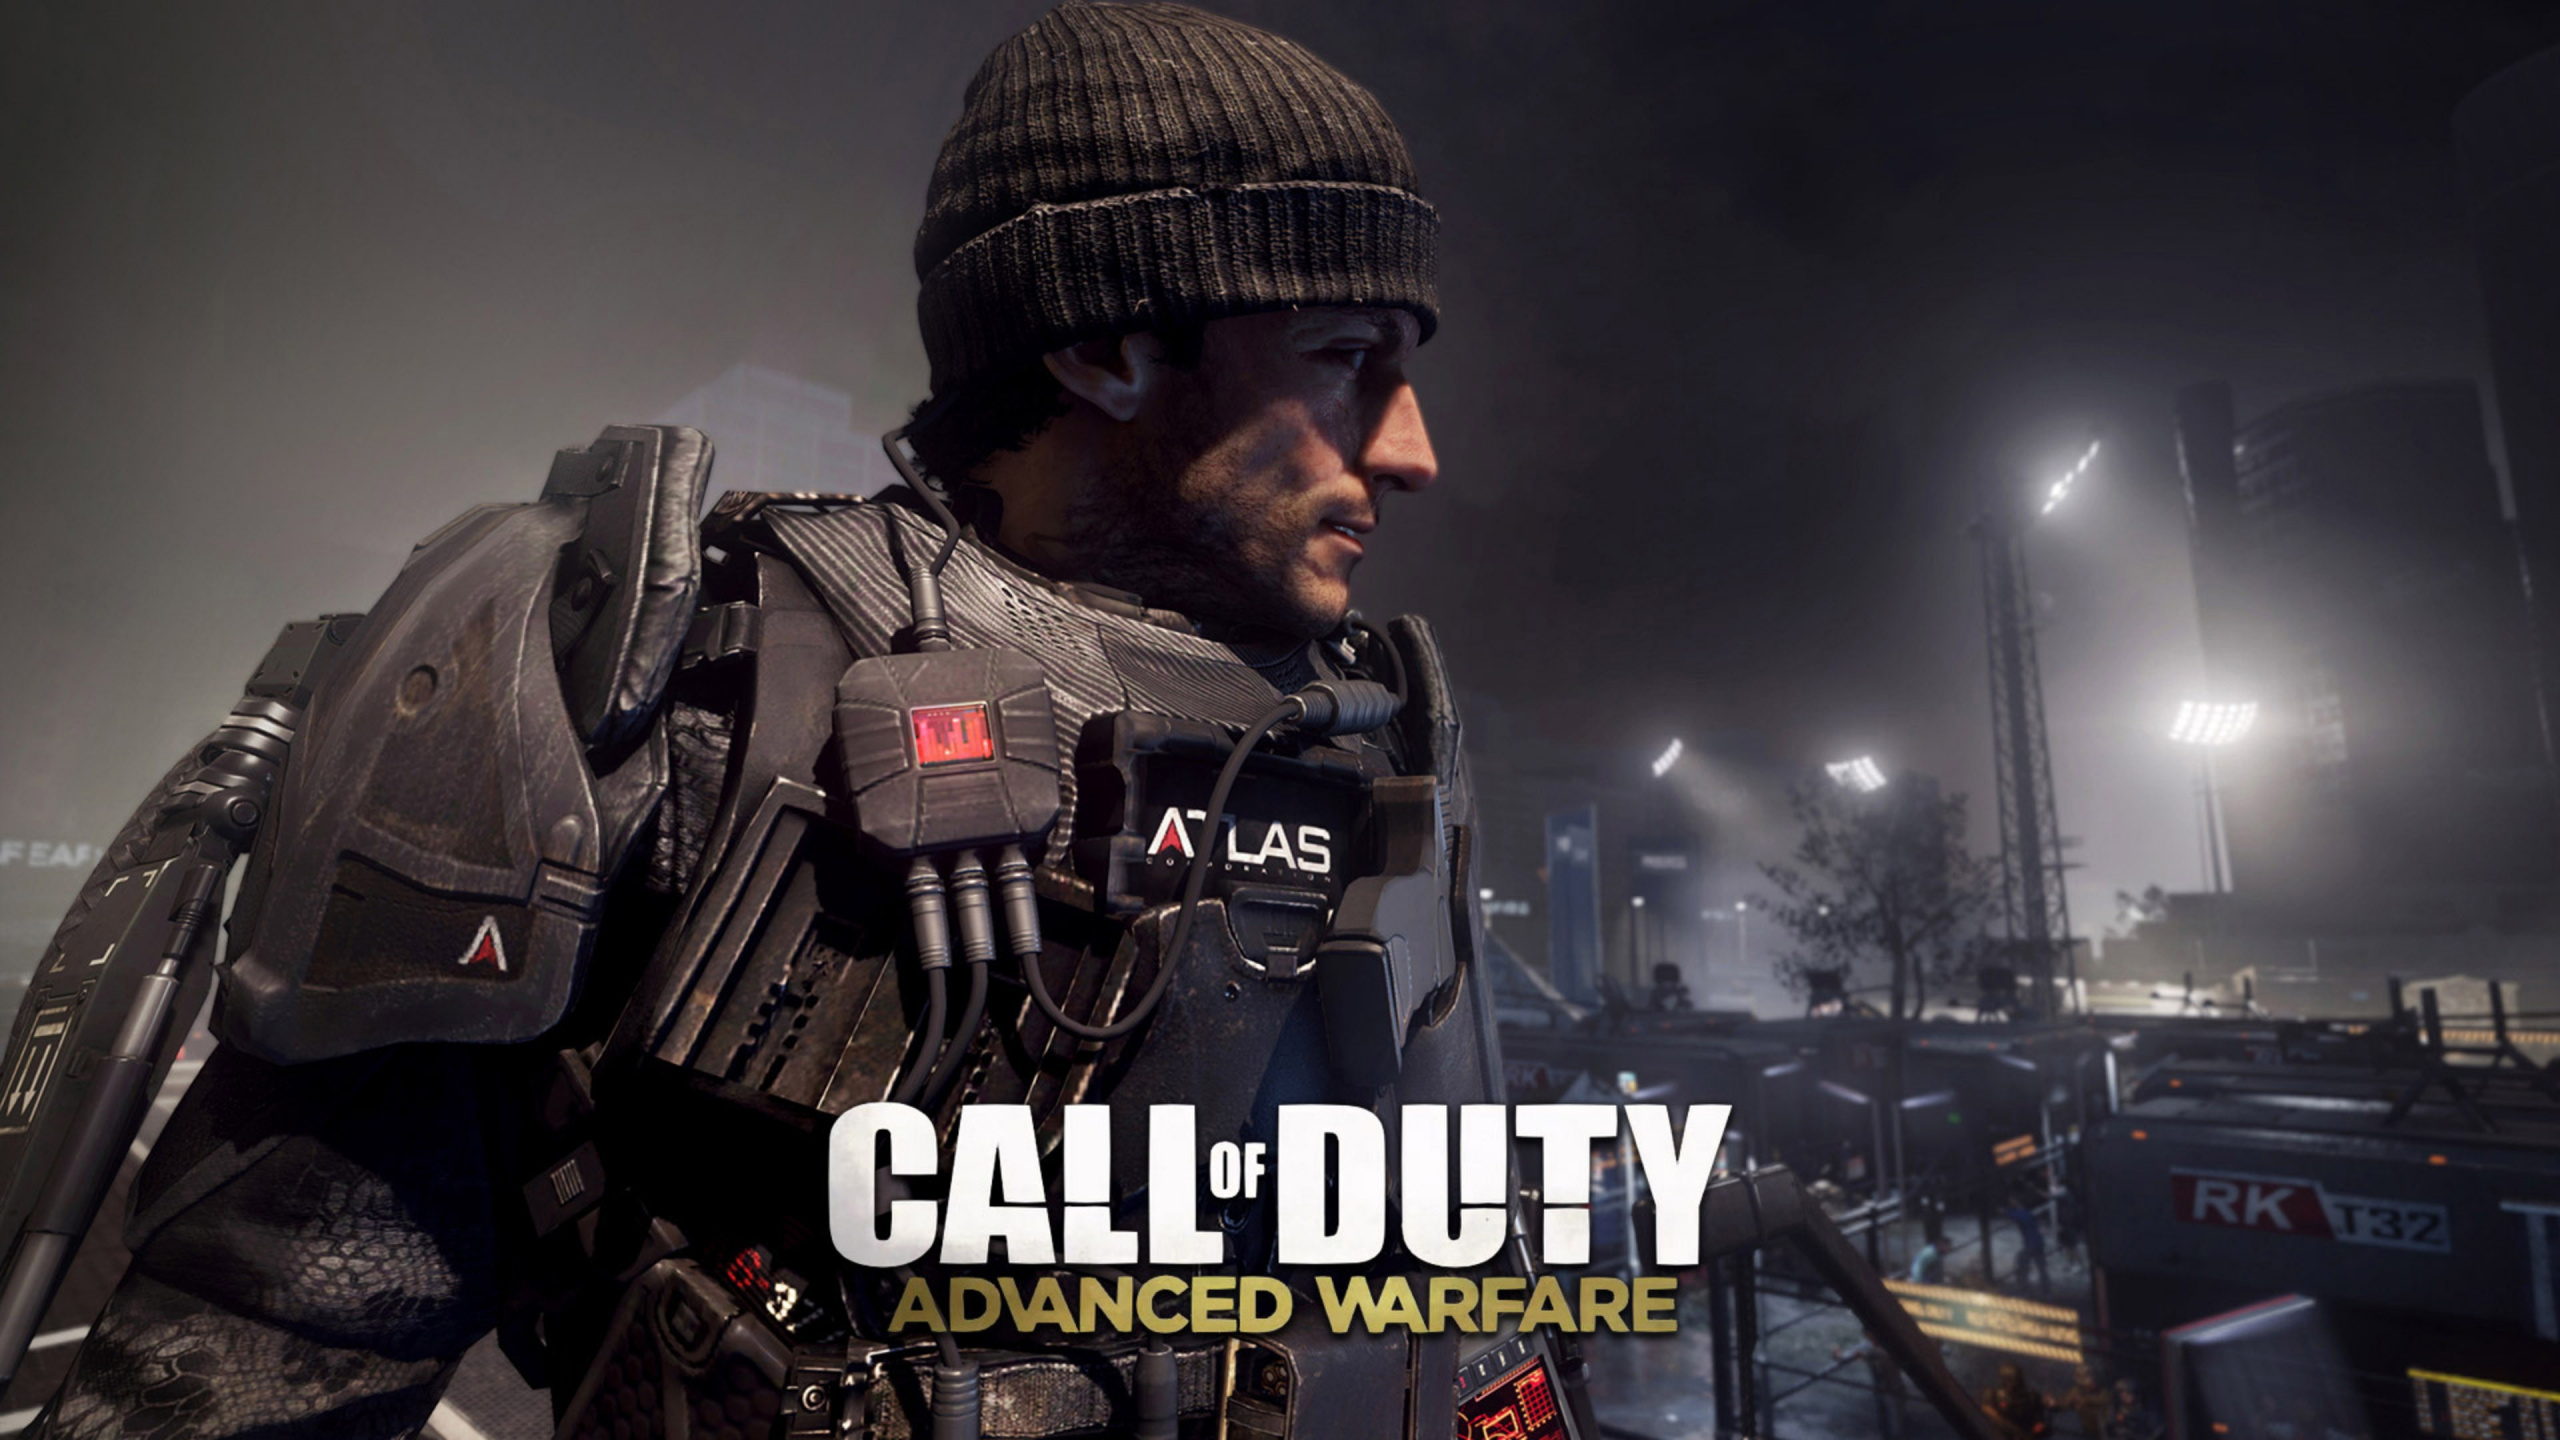 Call of Duty Advanced Warfare, Sledgehammer Games, Multiplayer-video-Spiel, Pc-Spiel, Soldat. Wallpaper in 2560x1440 Resolution